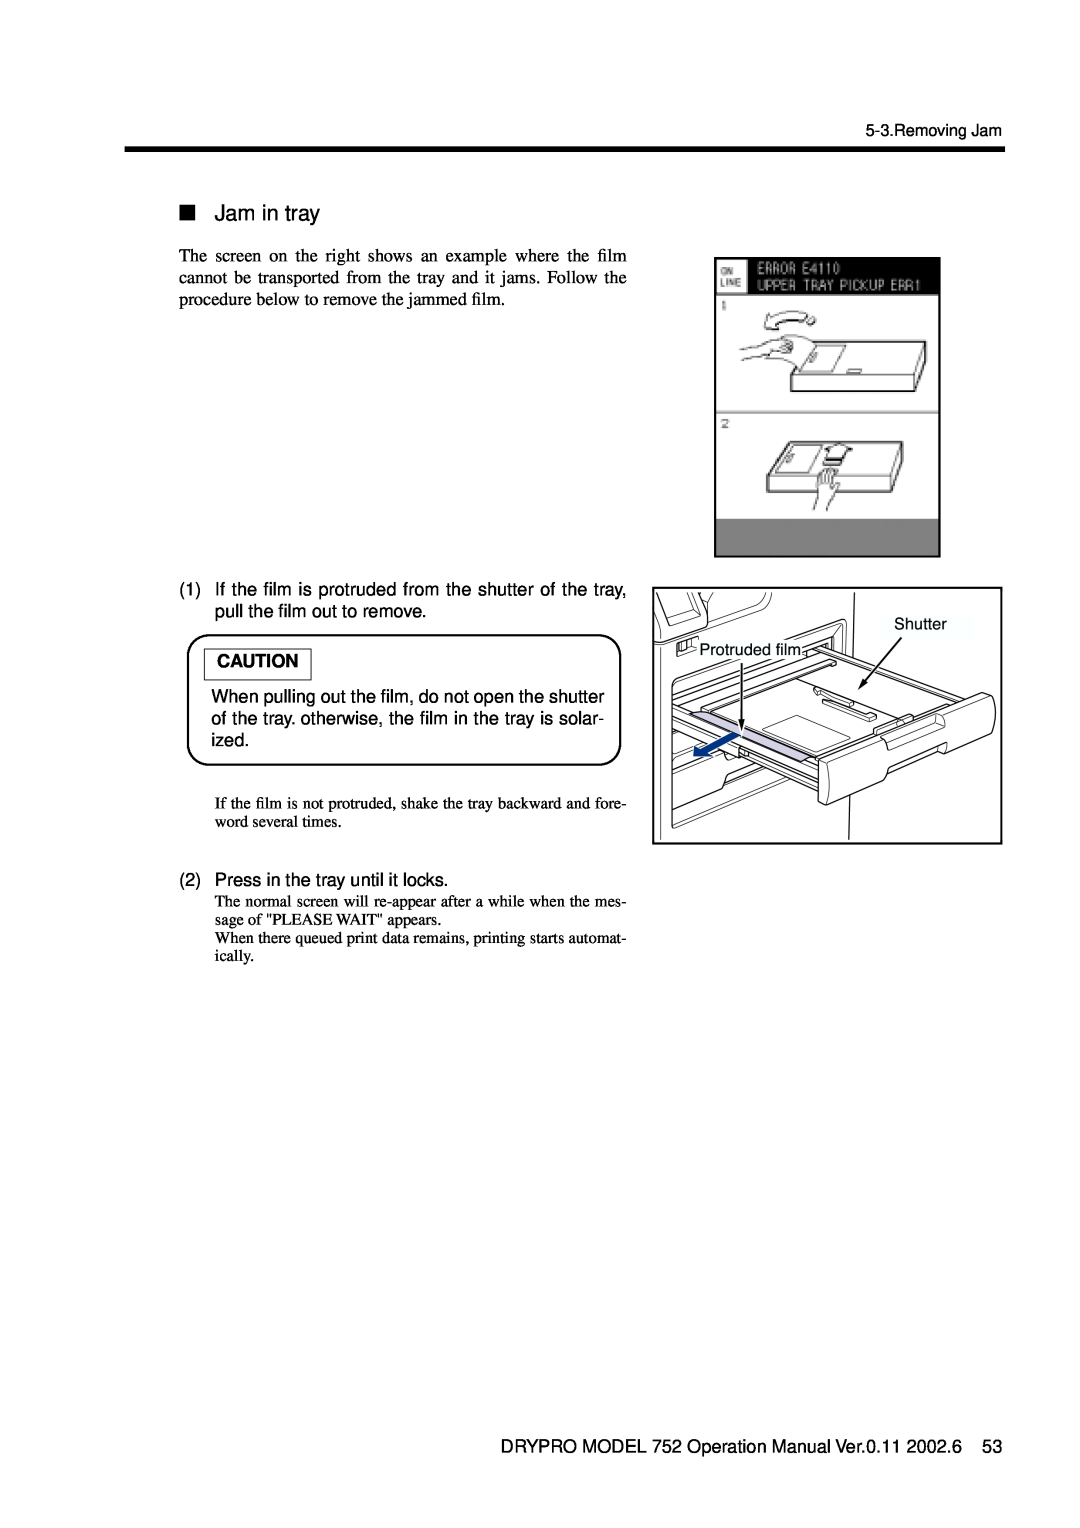 Konica Minolta 752 operation manual Jam in tray 